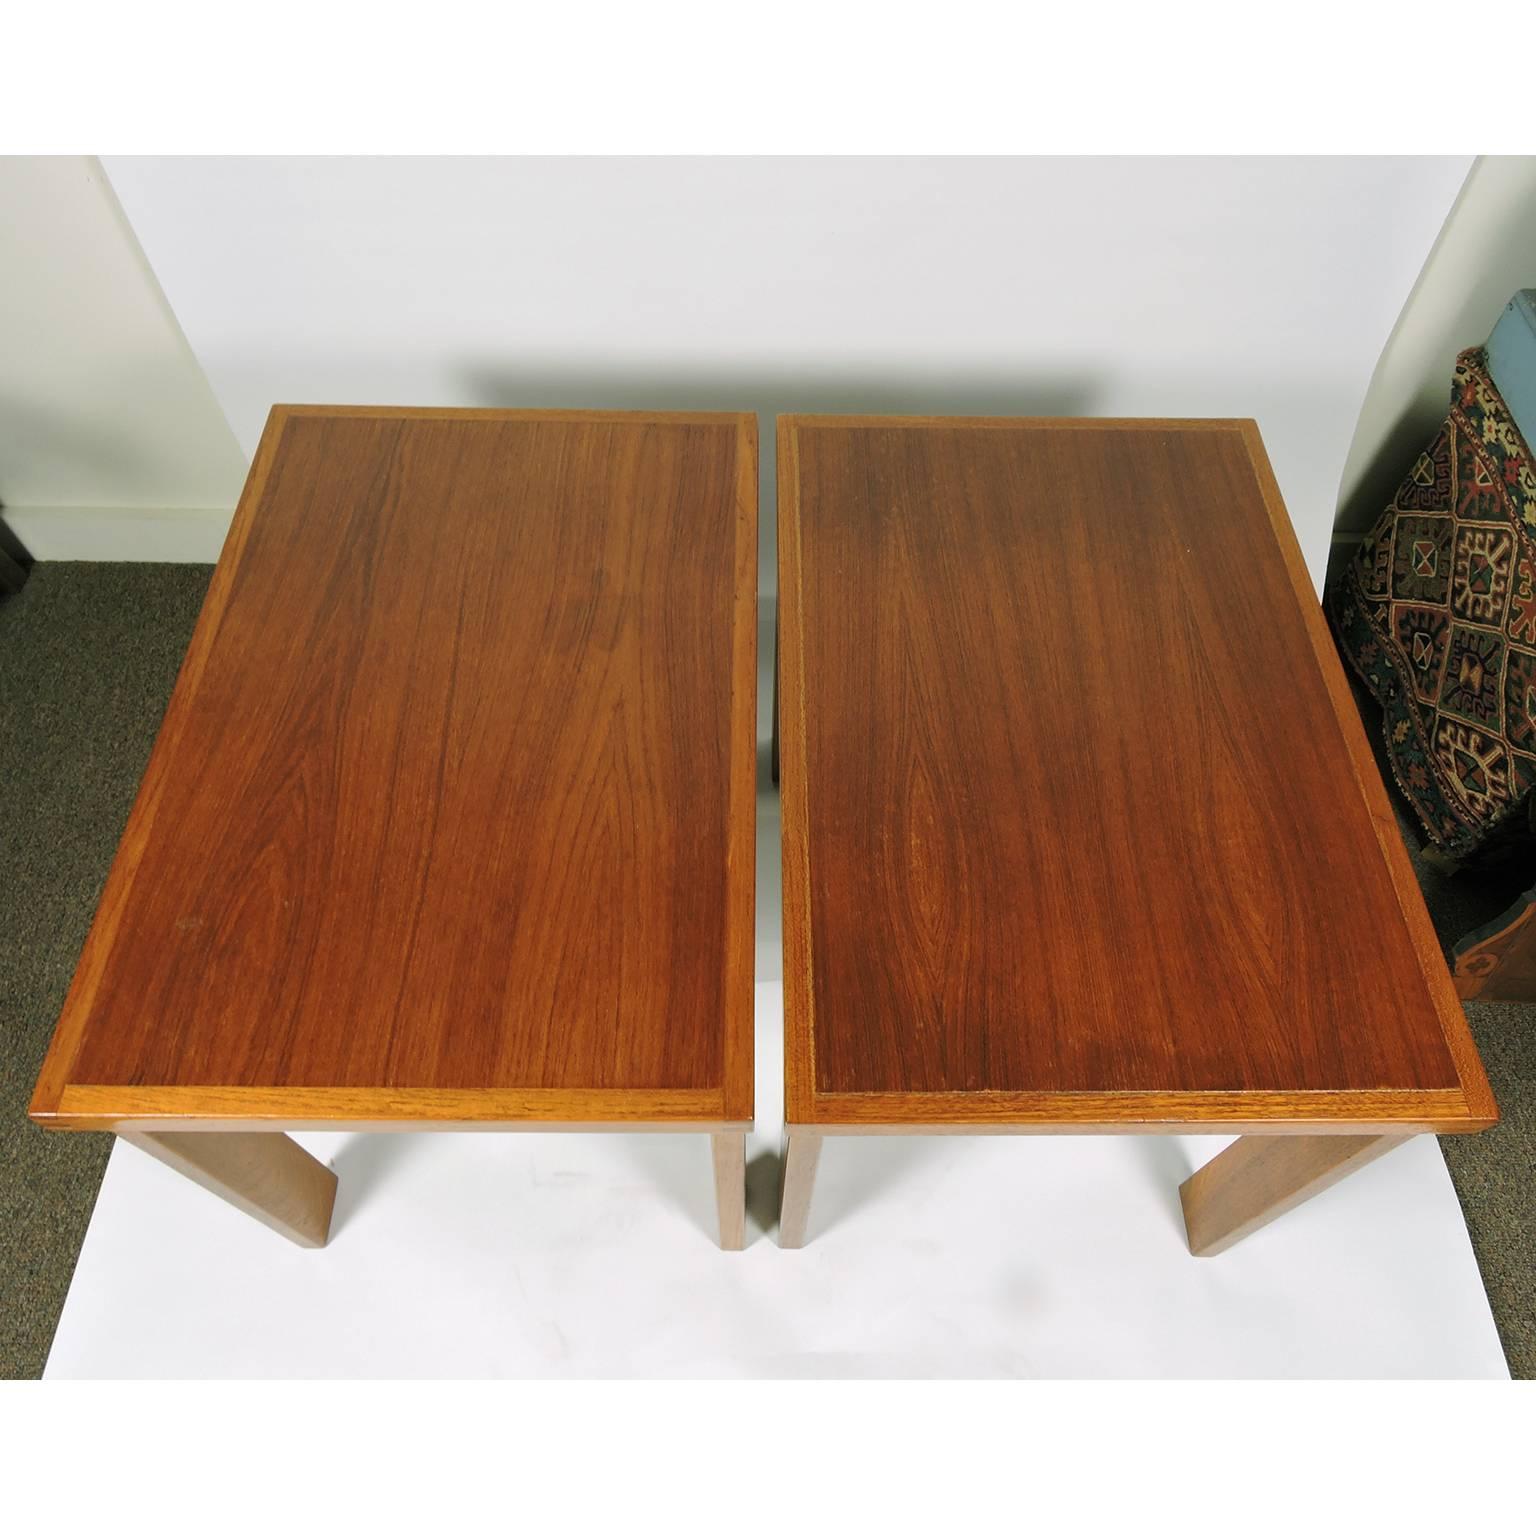 Pair of Danish Mid-Century Modern Teak Side Tables by Trioh Mobler 1